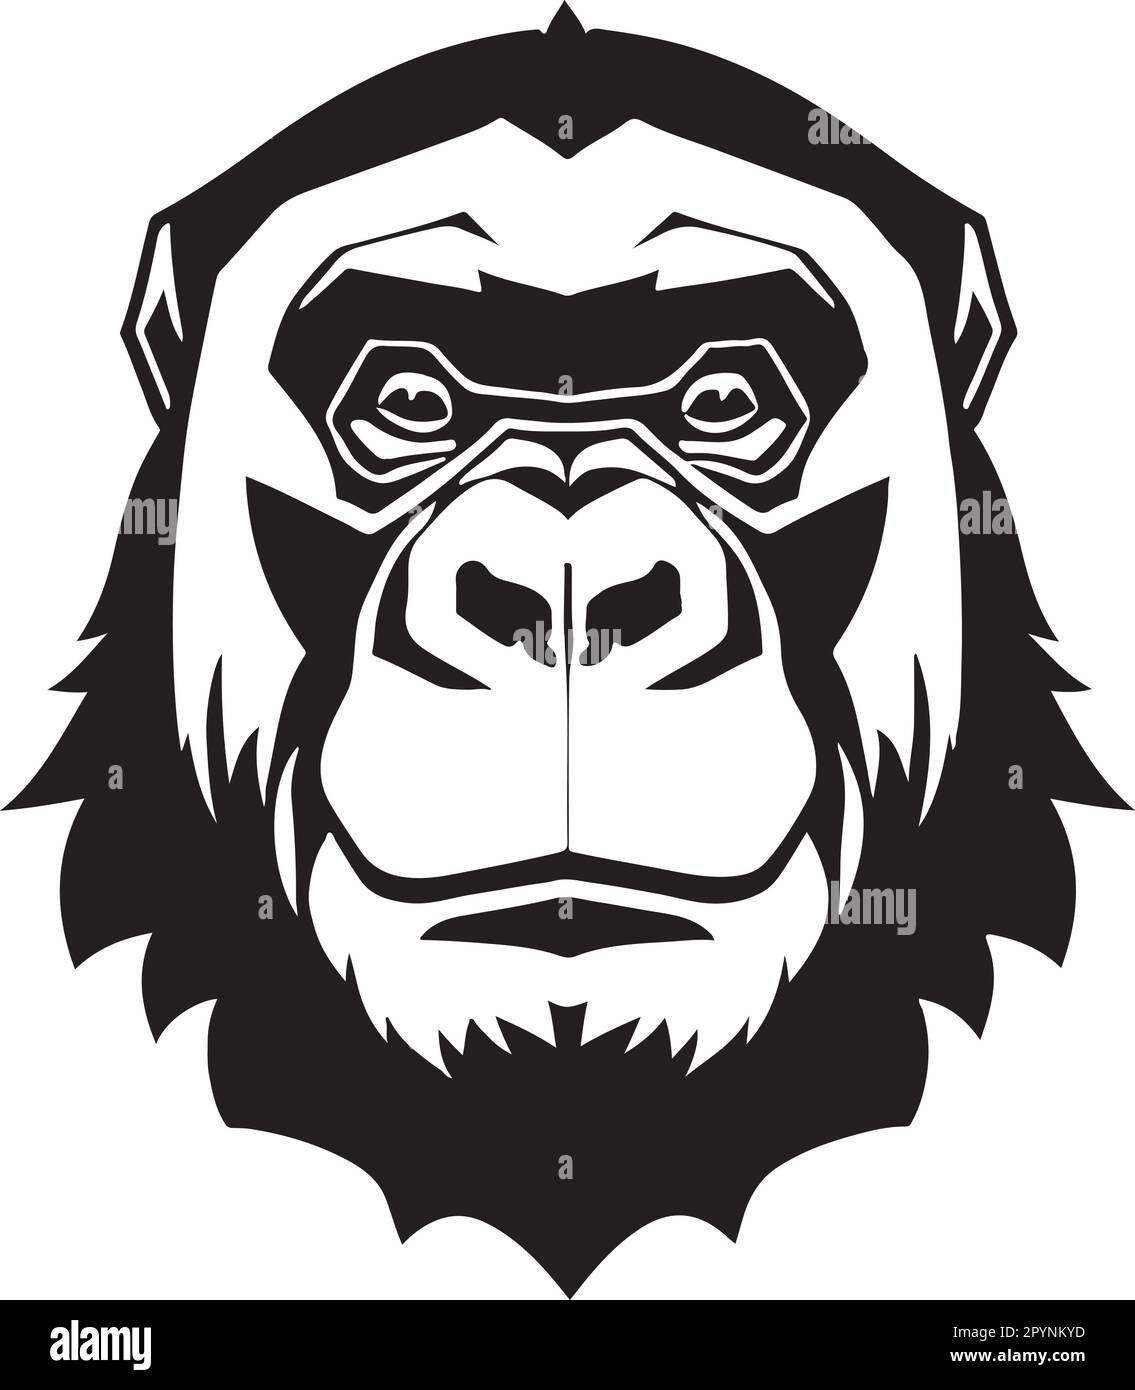 Great and powerful gorilla emblem art vector Stock Vector